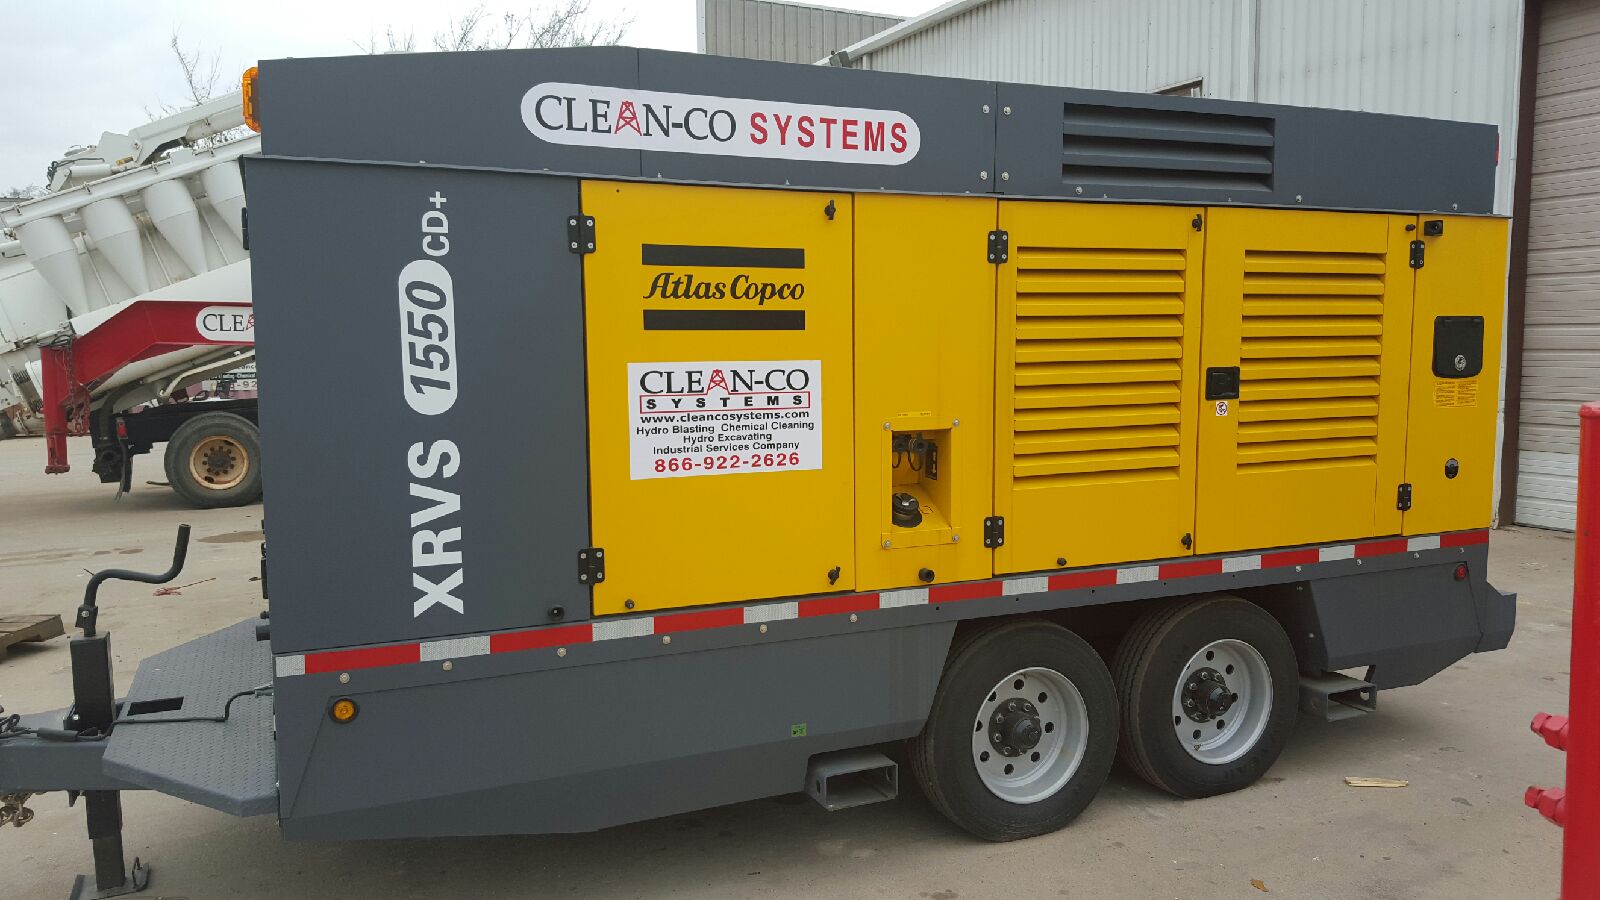 Cleanco-DryIce-blasting-equipment compressor